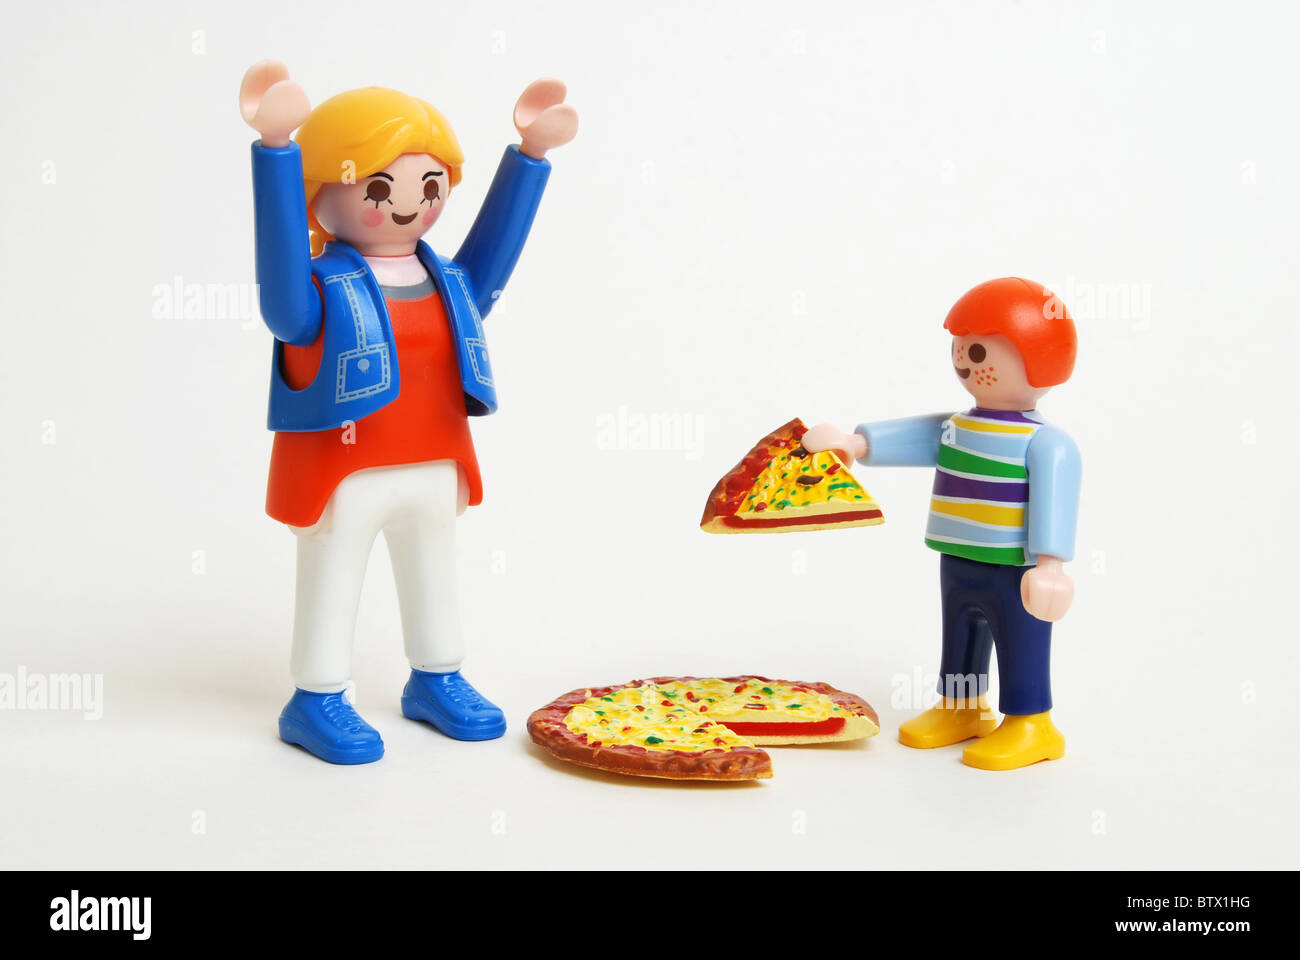 Fast food pizza diet obesity children illness fat Stock Photo